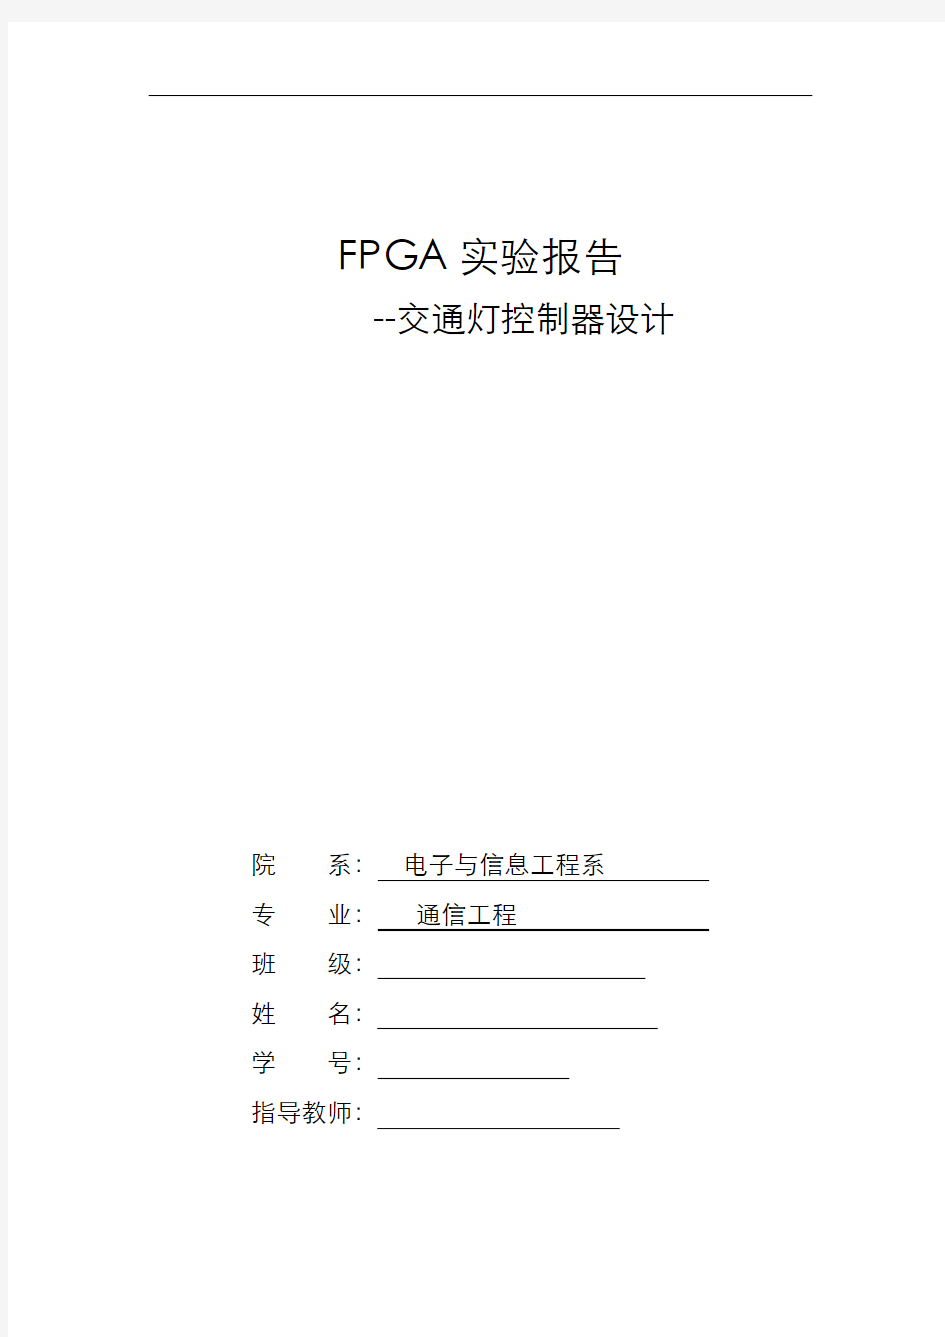 FPGA实验报告-交通灯控制器设计